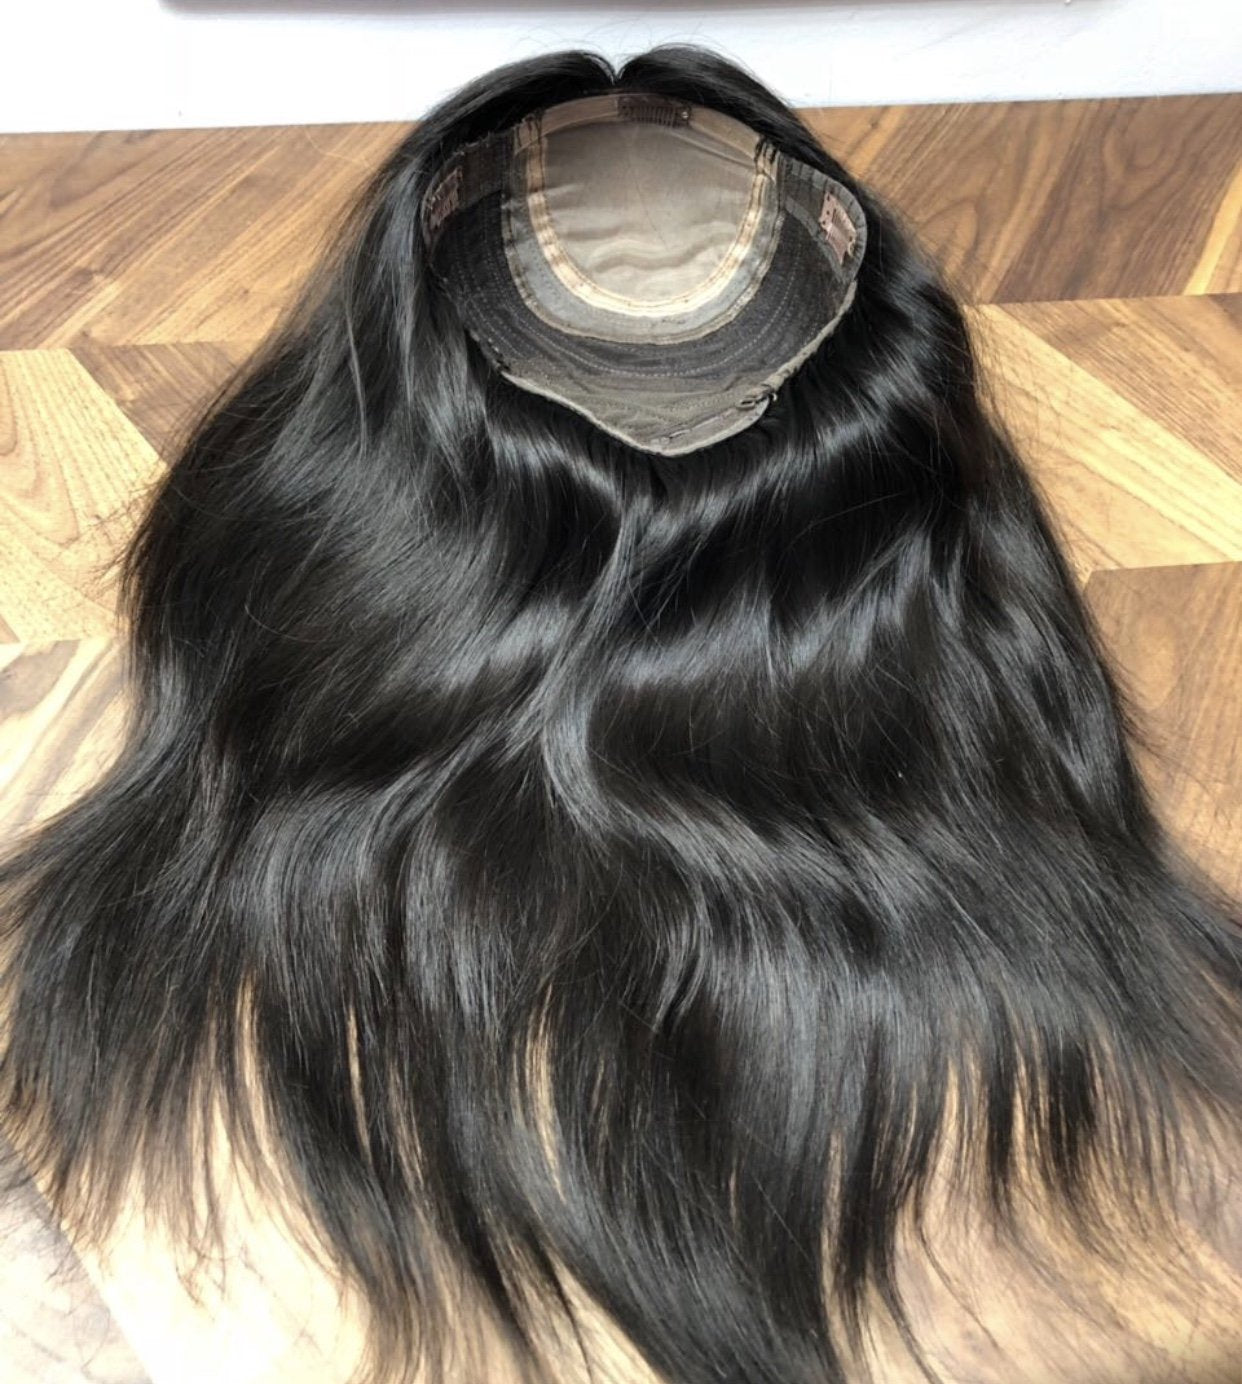 Wigs Color Blue GVA hair_Retail price - GVA hair